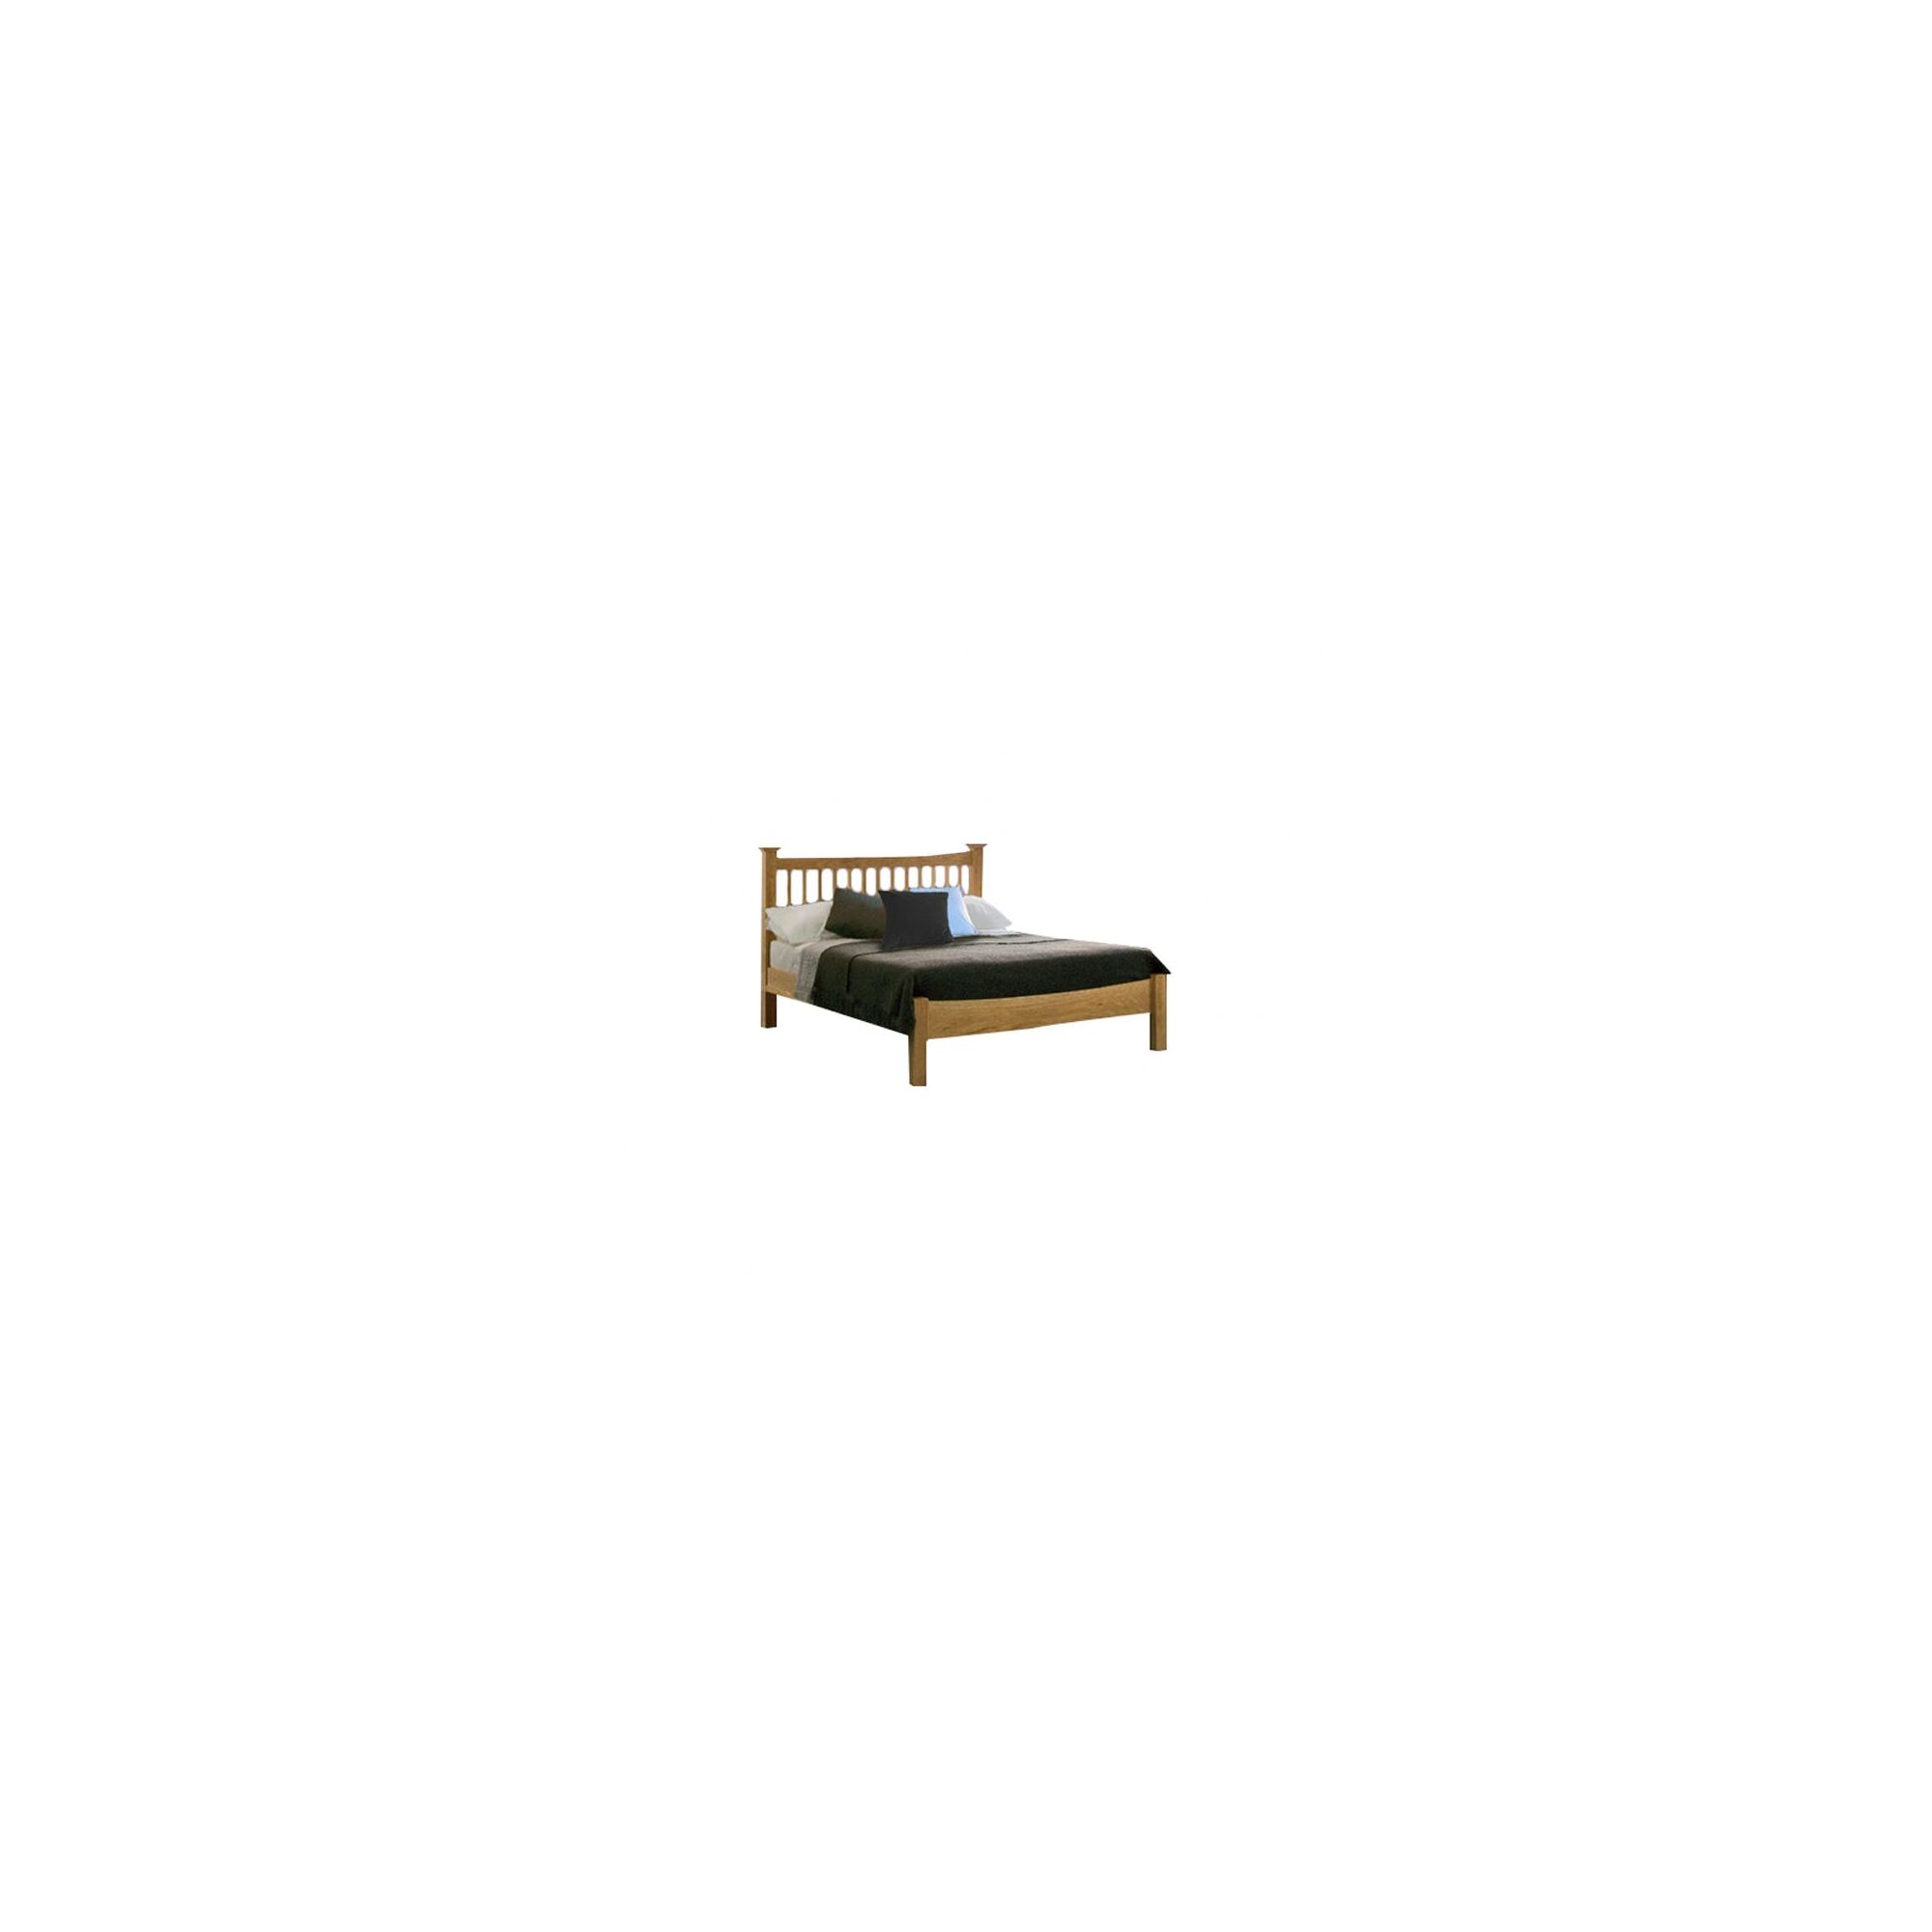 Flintshire Furniture Aaston Bedstead in solid oak - Without Drawer - King at Tescos Direct